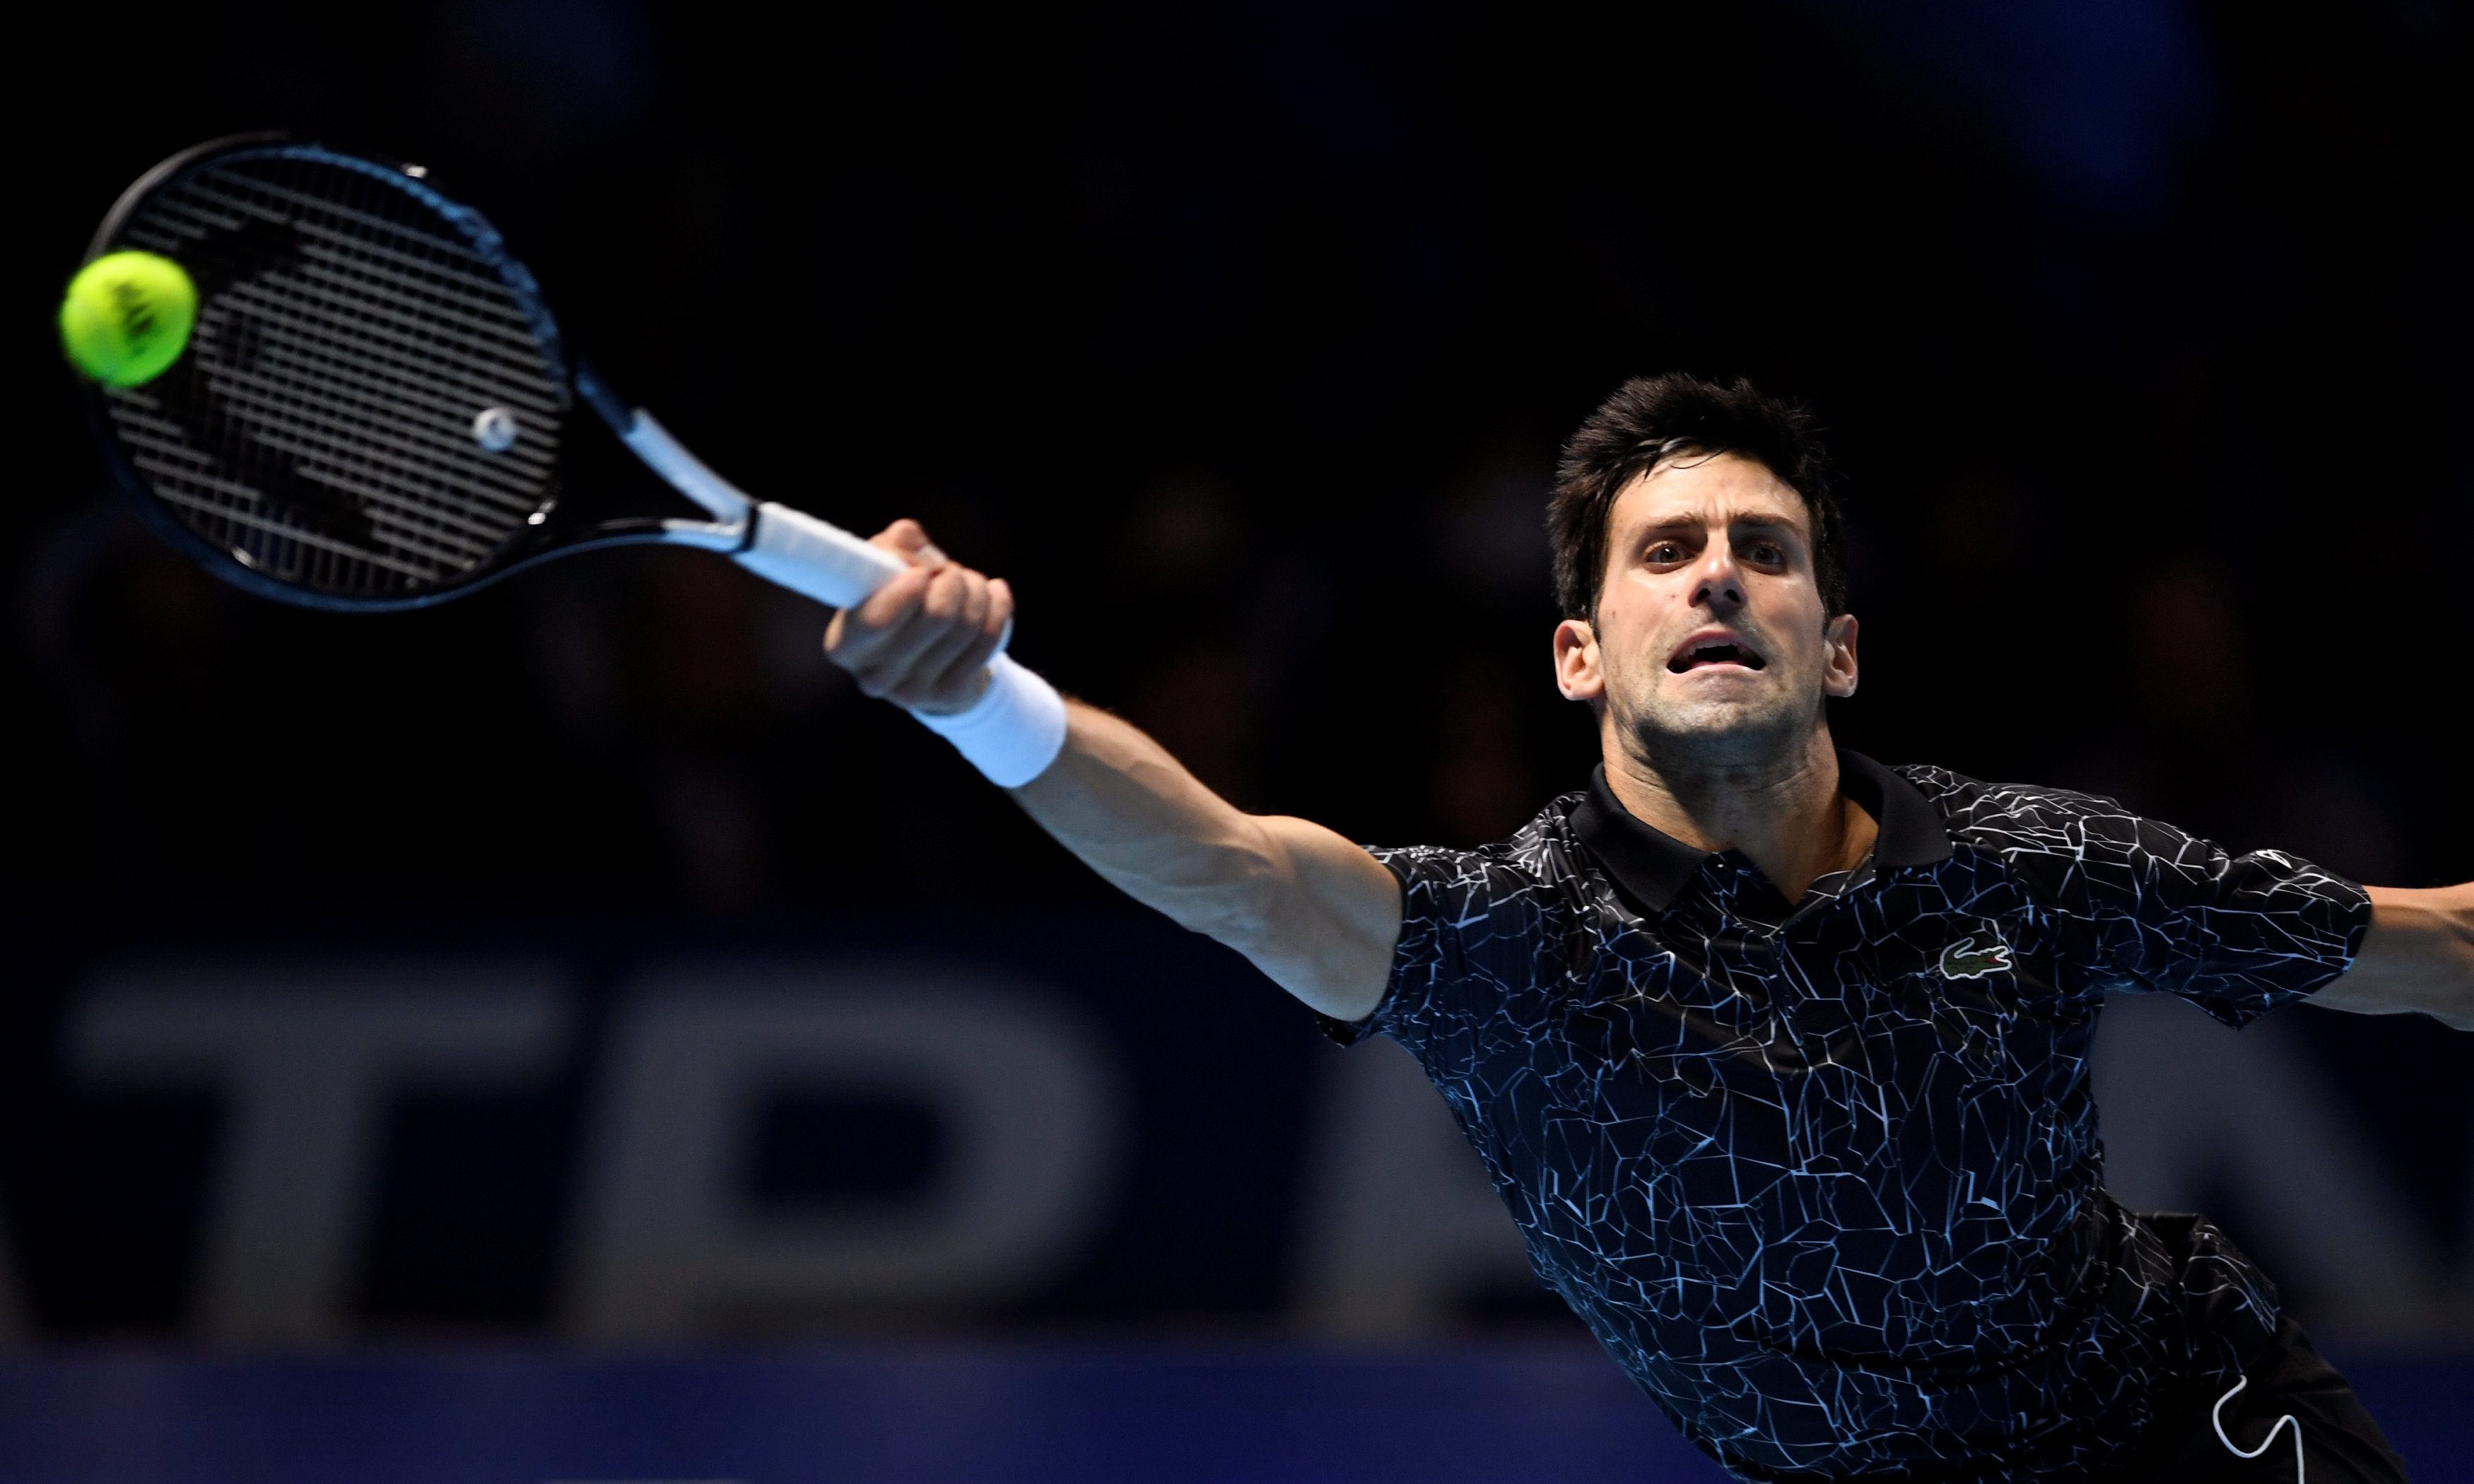 Descarga gratuita de fondo de pantalla para móvil de Tenis, Serbio, Deporte, Novak Djokovic.